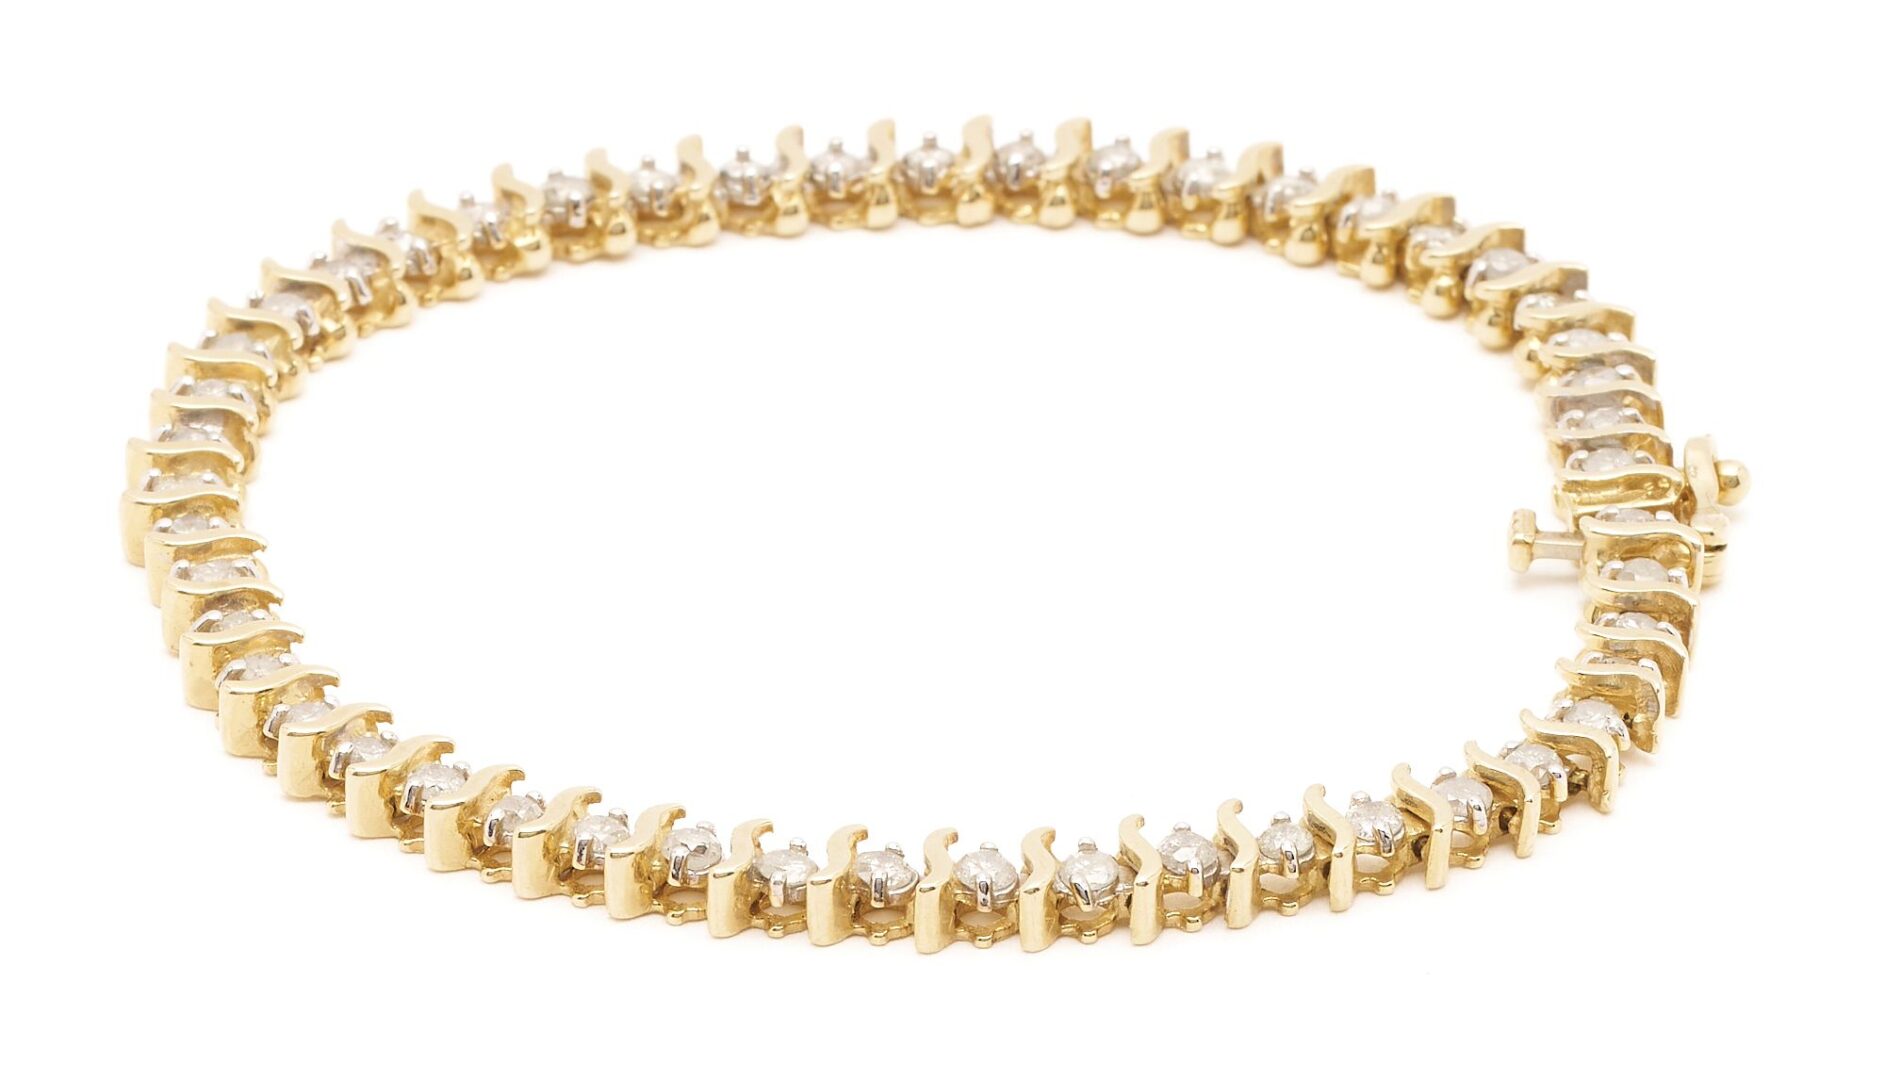 Lot 623: Two (2) Gold & Diamond Bracelets – One 14K White Gold & One 10K Yellow Gold